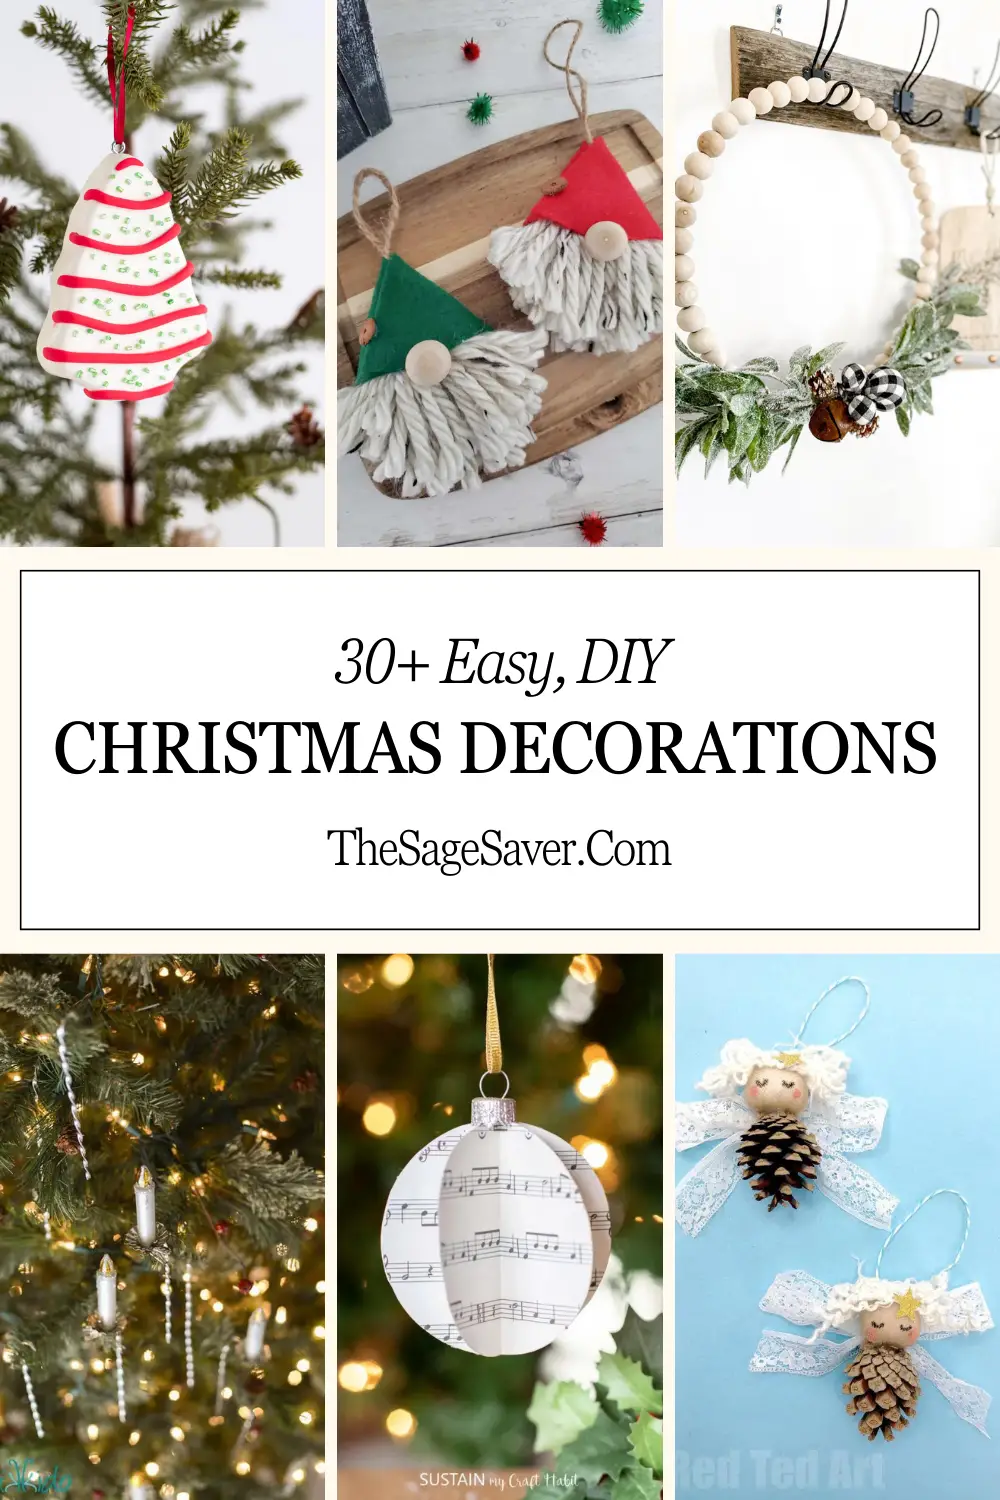 How to Make Easy Homemade Christmas Decorations - The Sage Saver